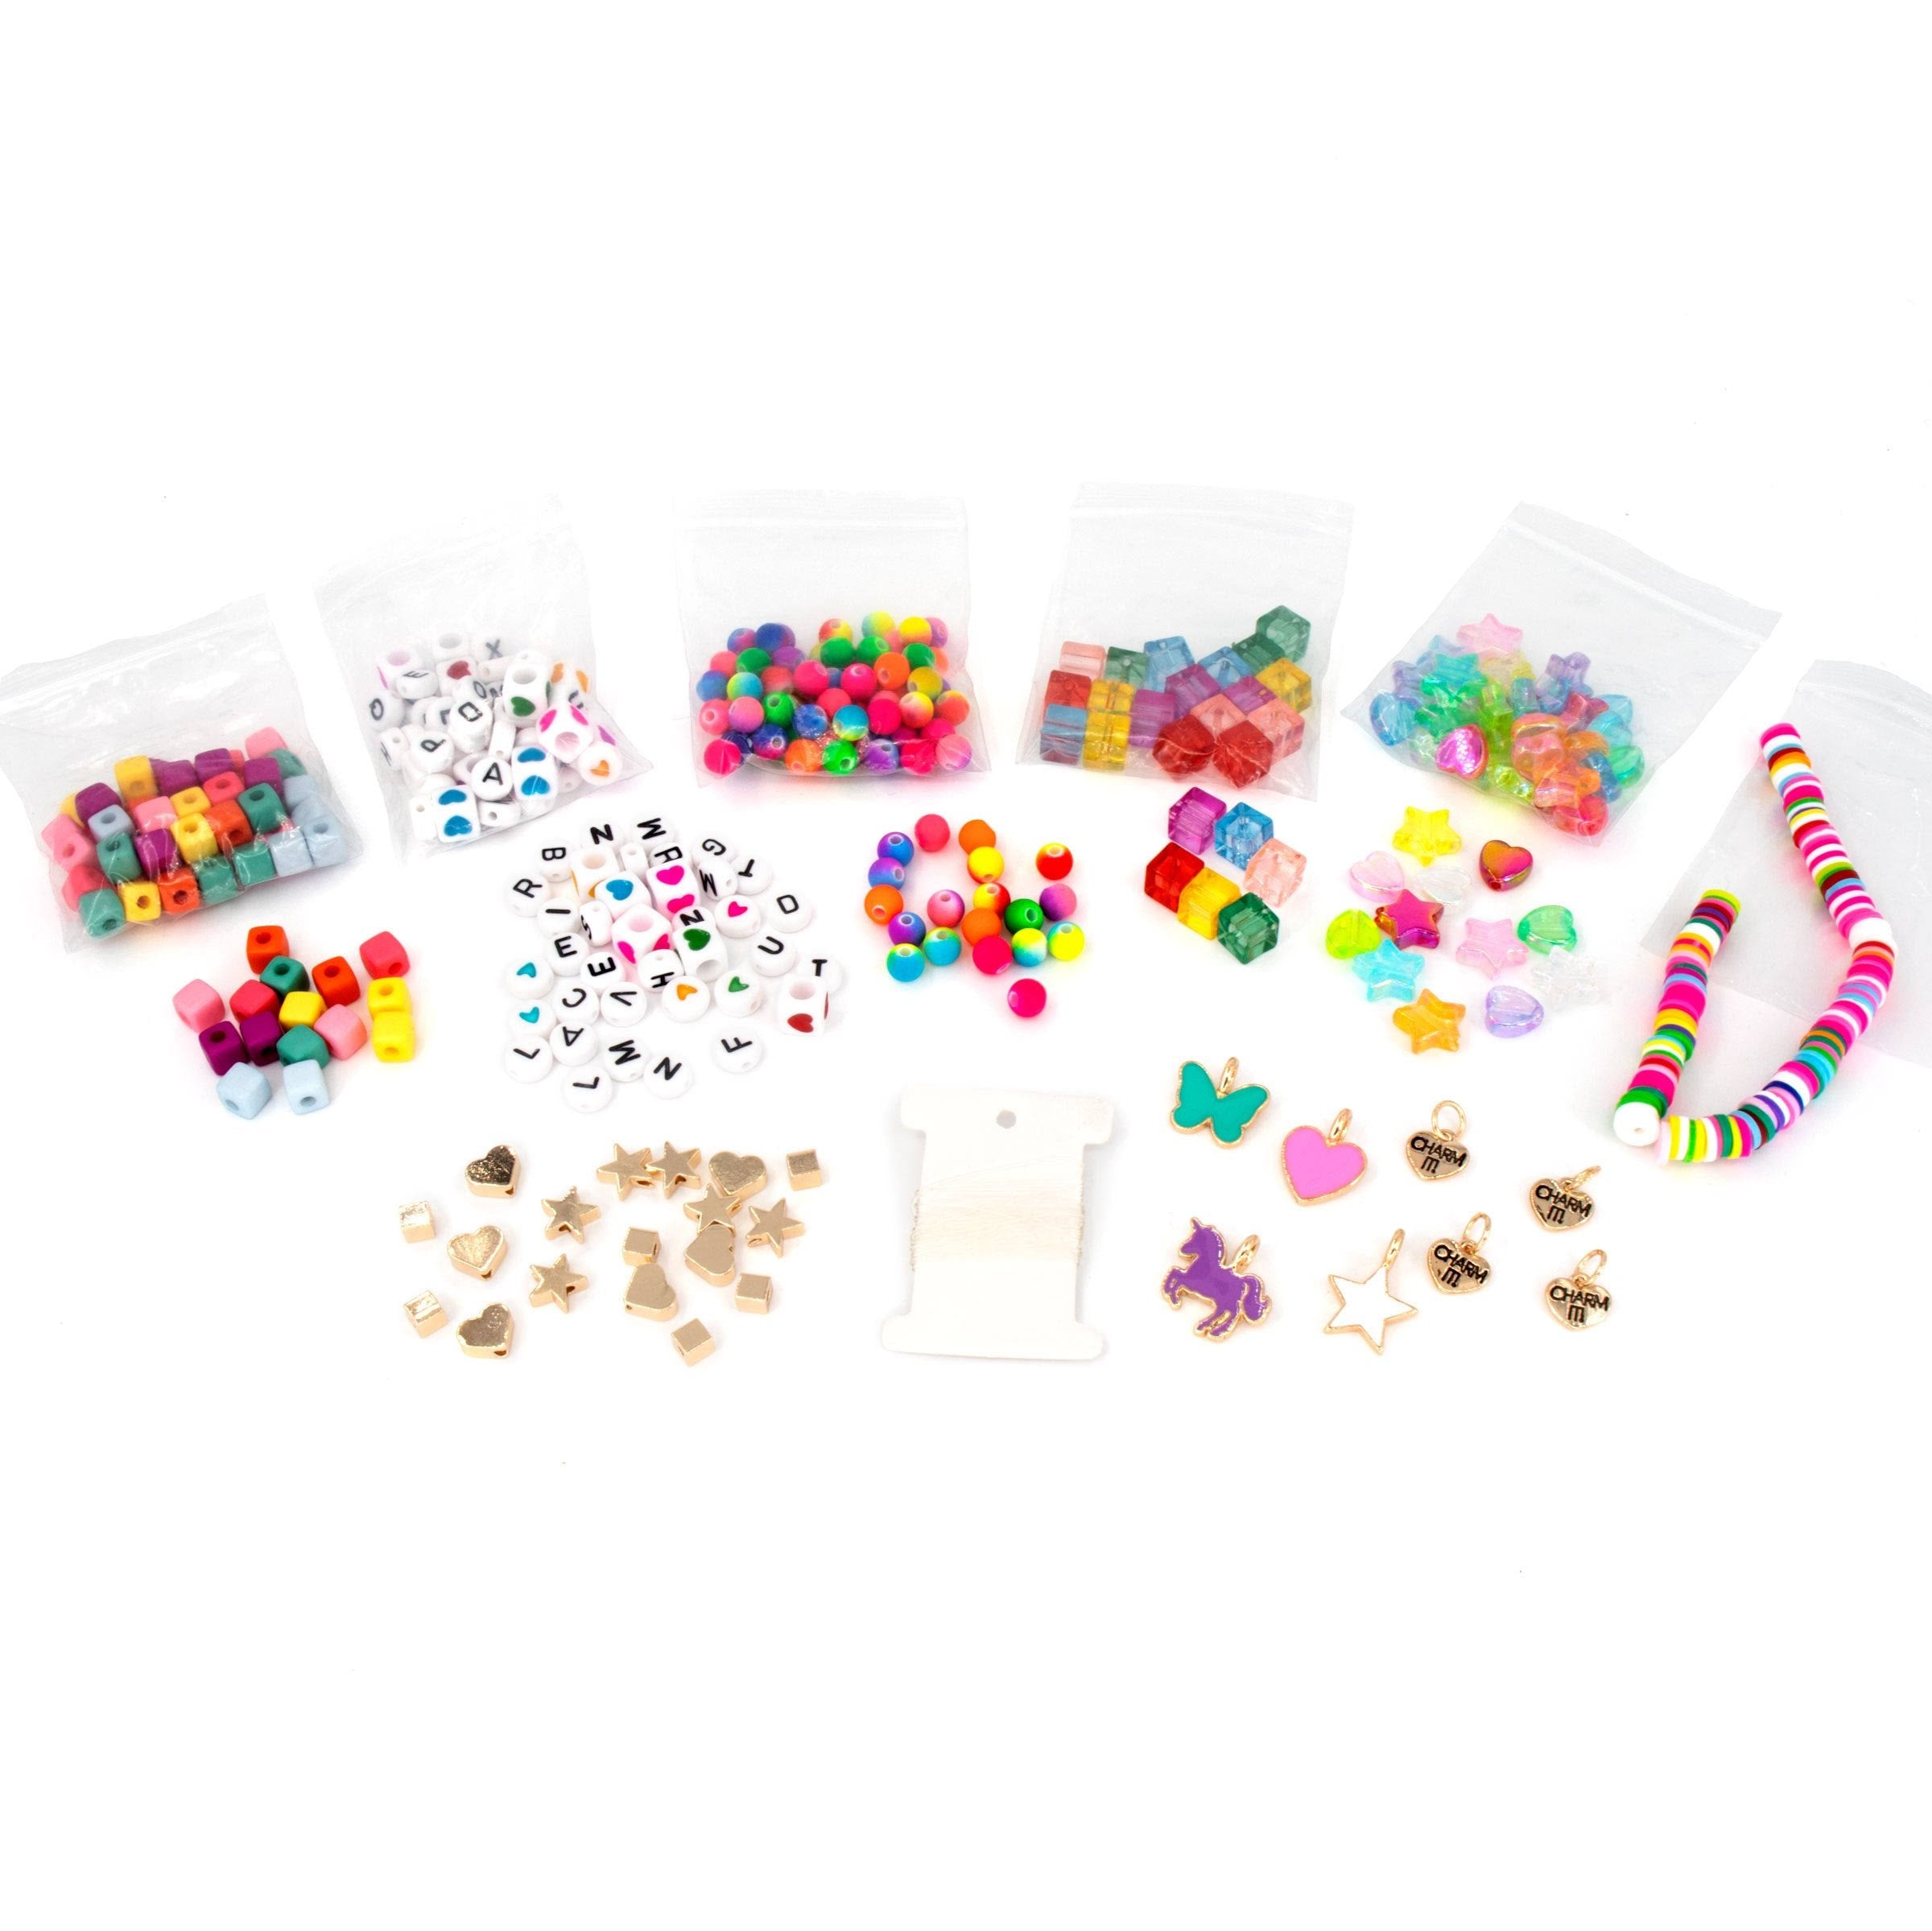 Charmit Rainbow Bead Kit - Multicolour - Baby Moo